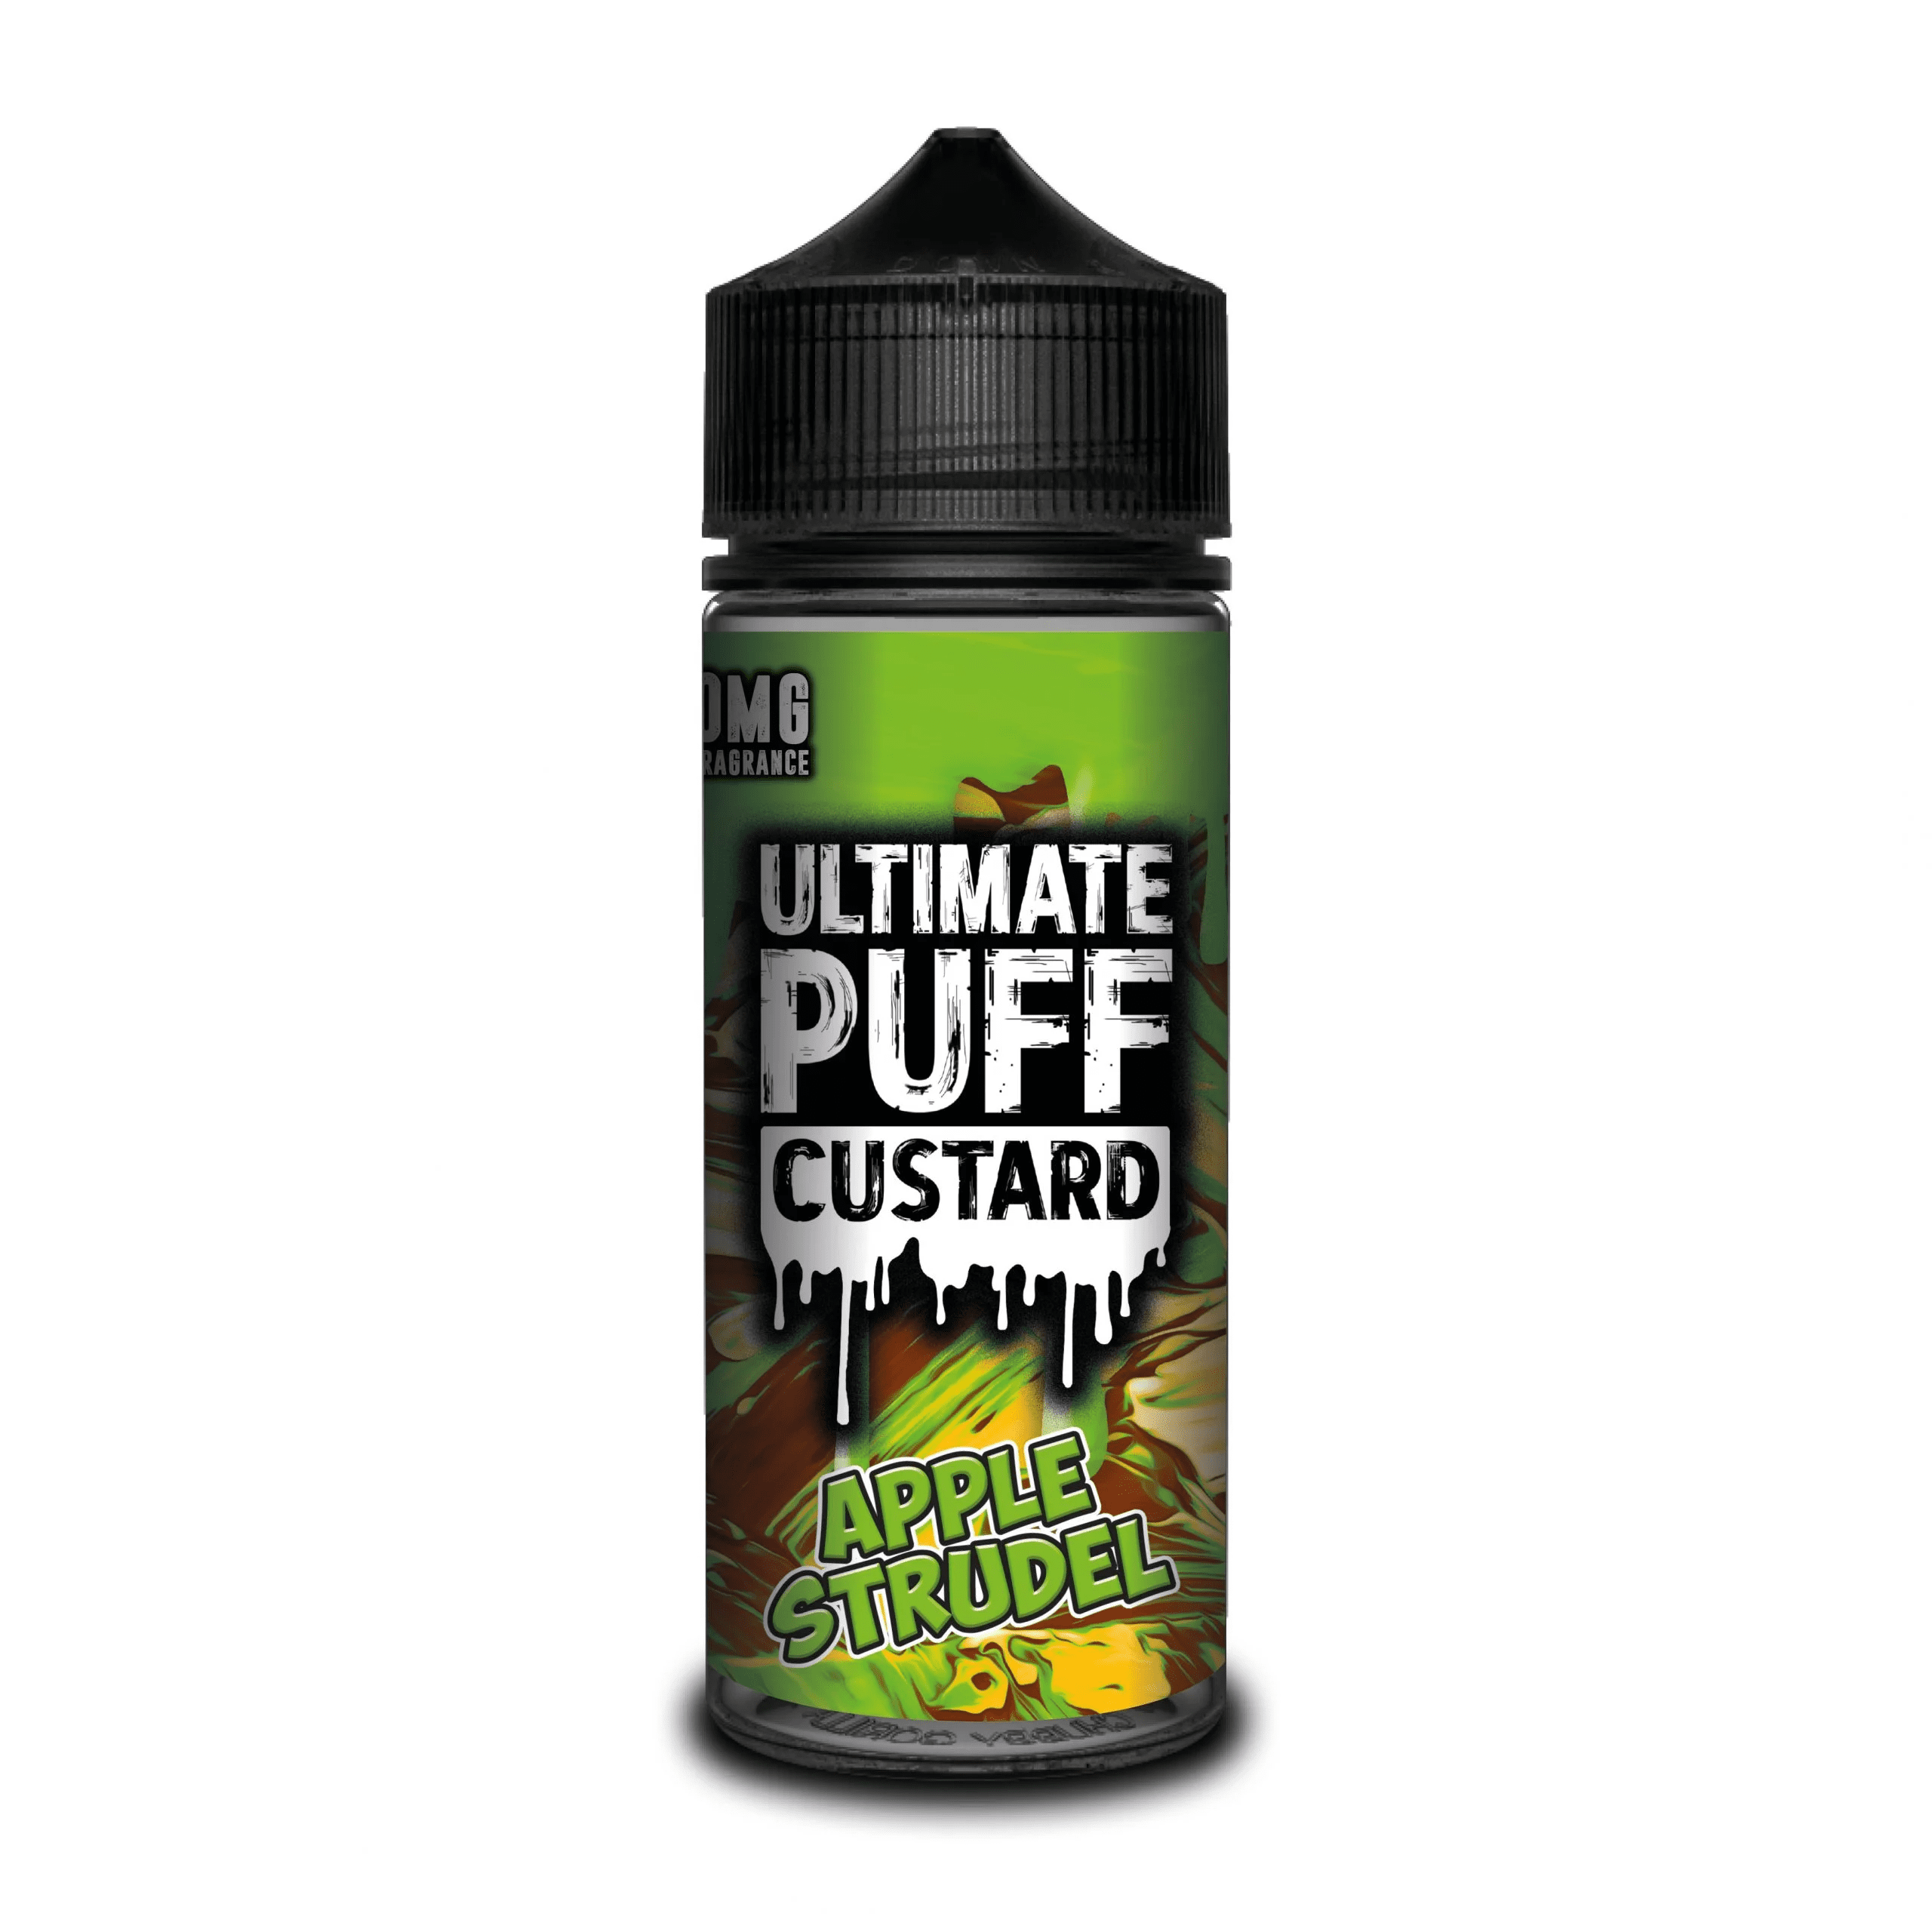  Ultimate Puff Custard - Apple Strudel - 100ml 